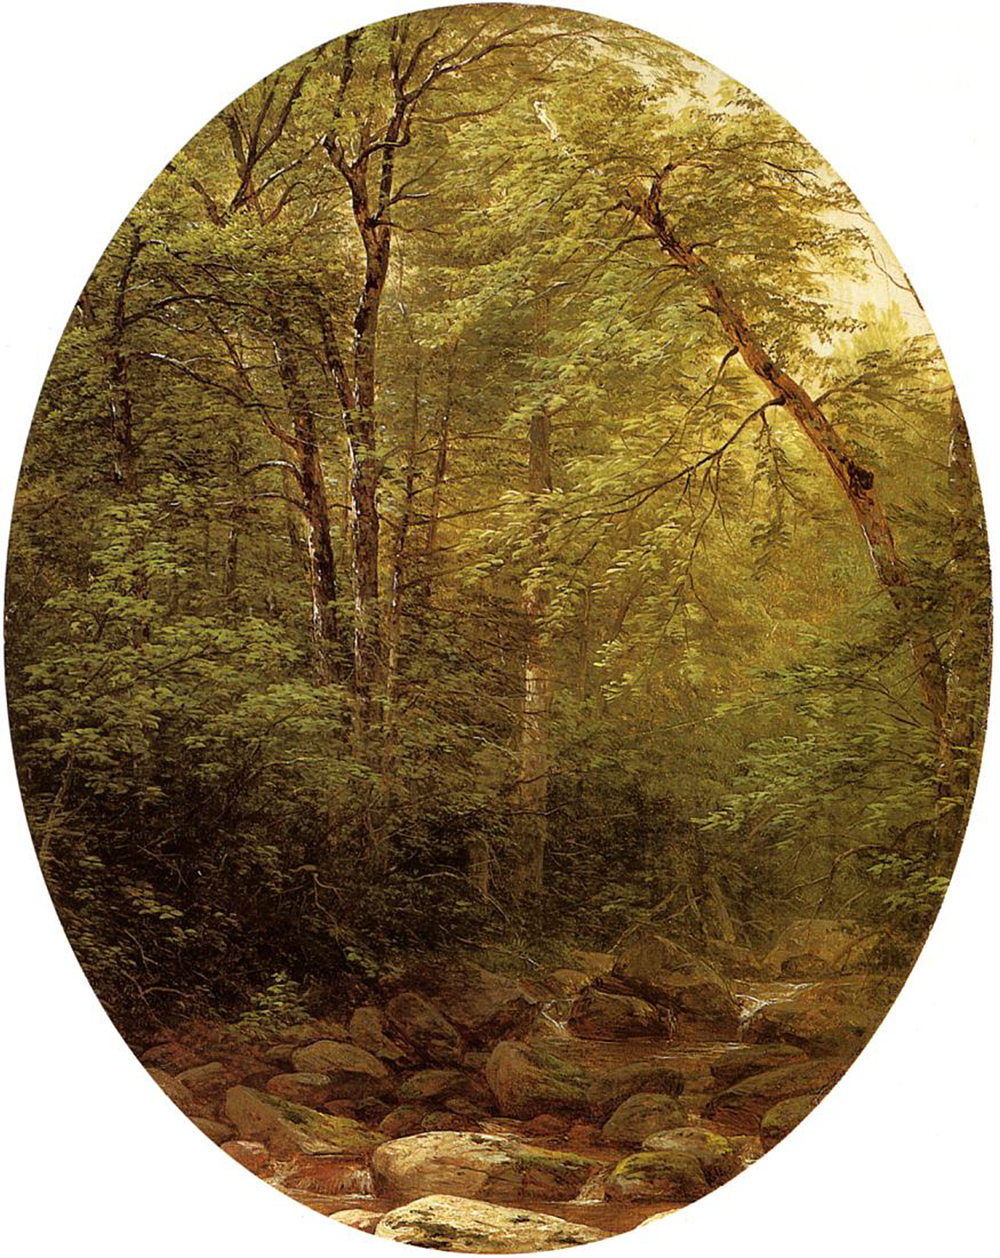 Above the Falls, Catskill, by John William Casilear, c. 1862.